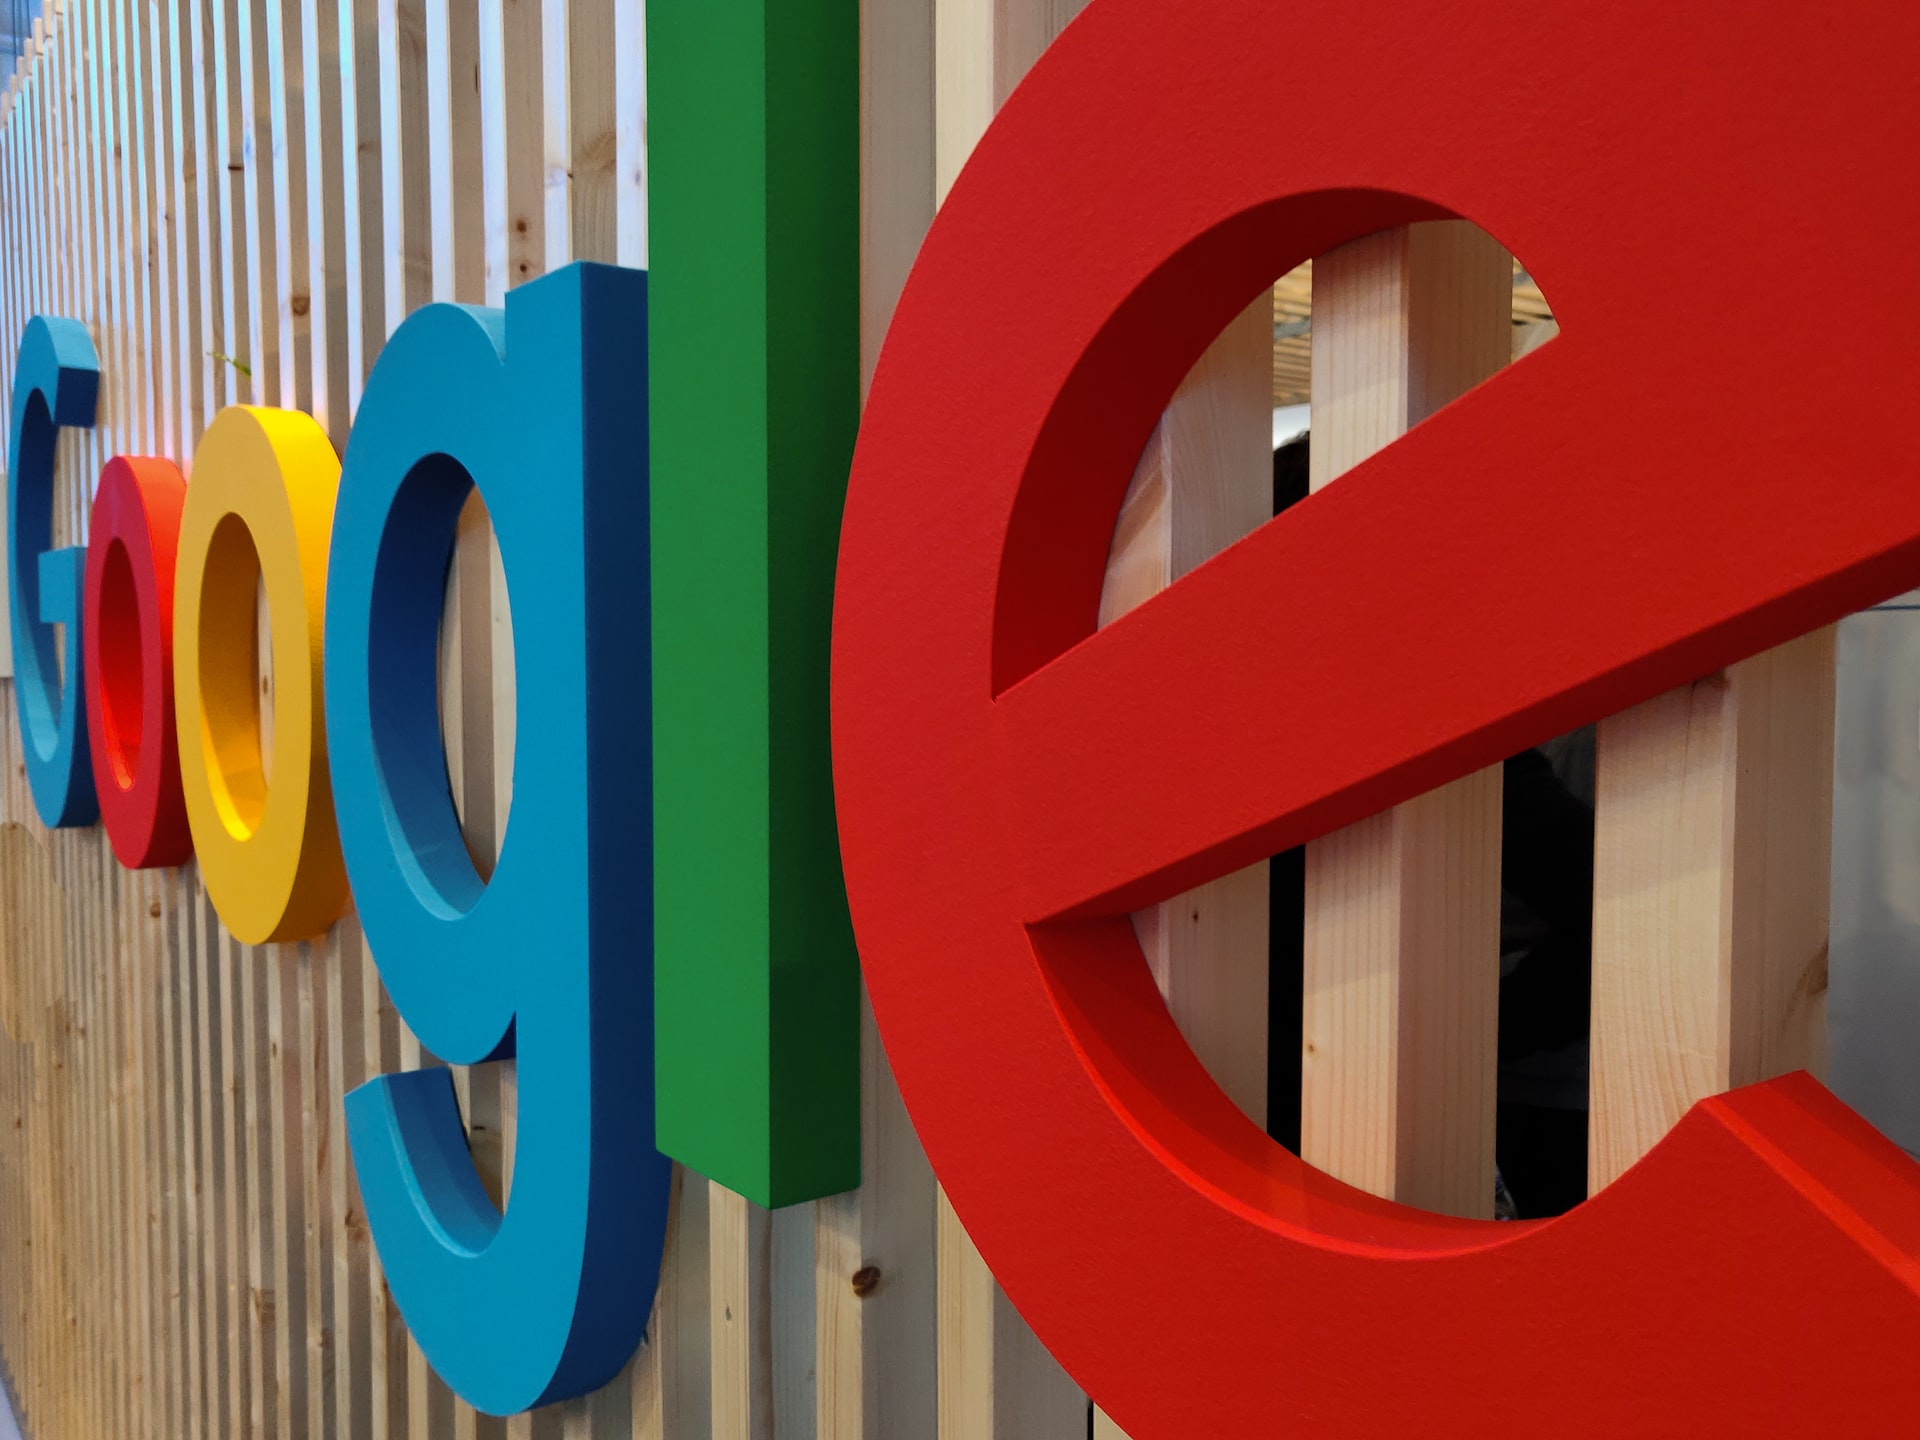 Google is introducing its chatbox, Bard